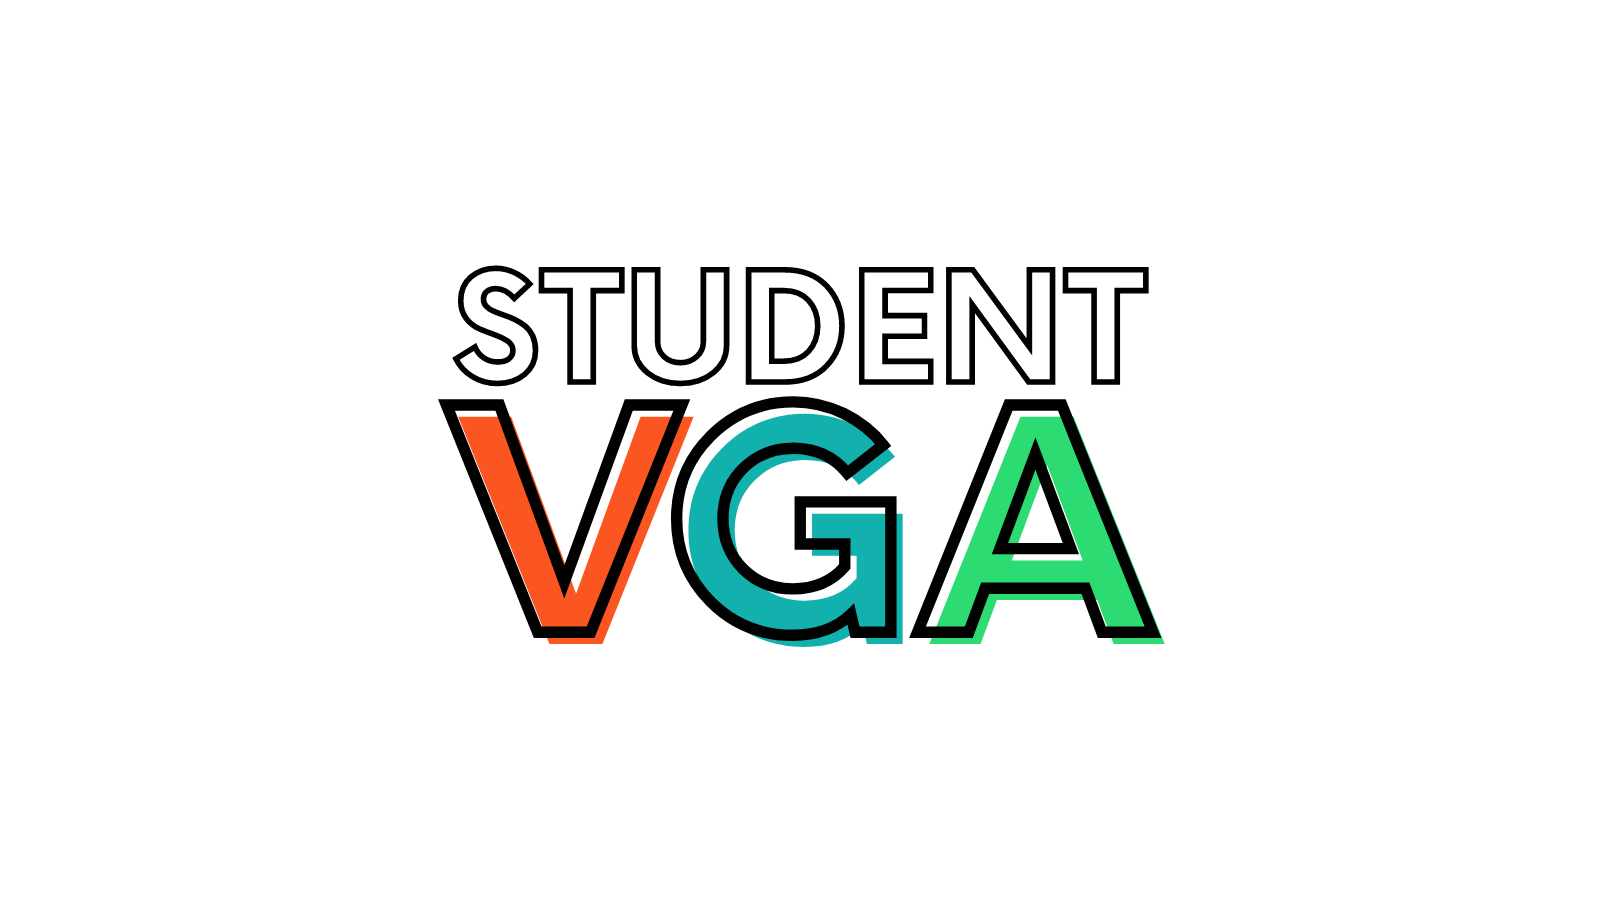 Become a Student Video Games Ambassador!